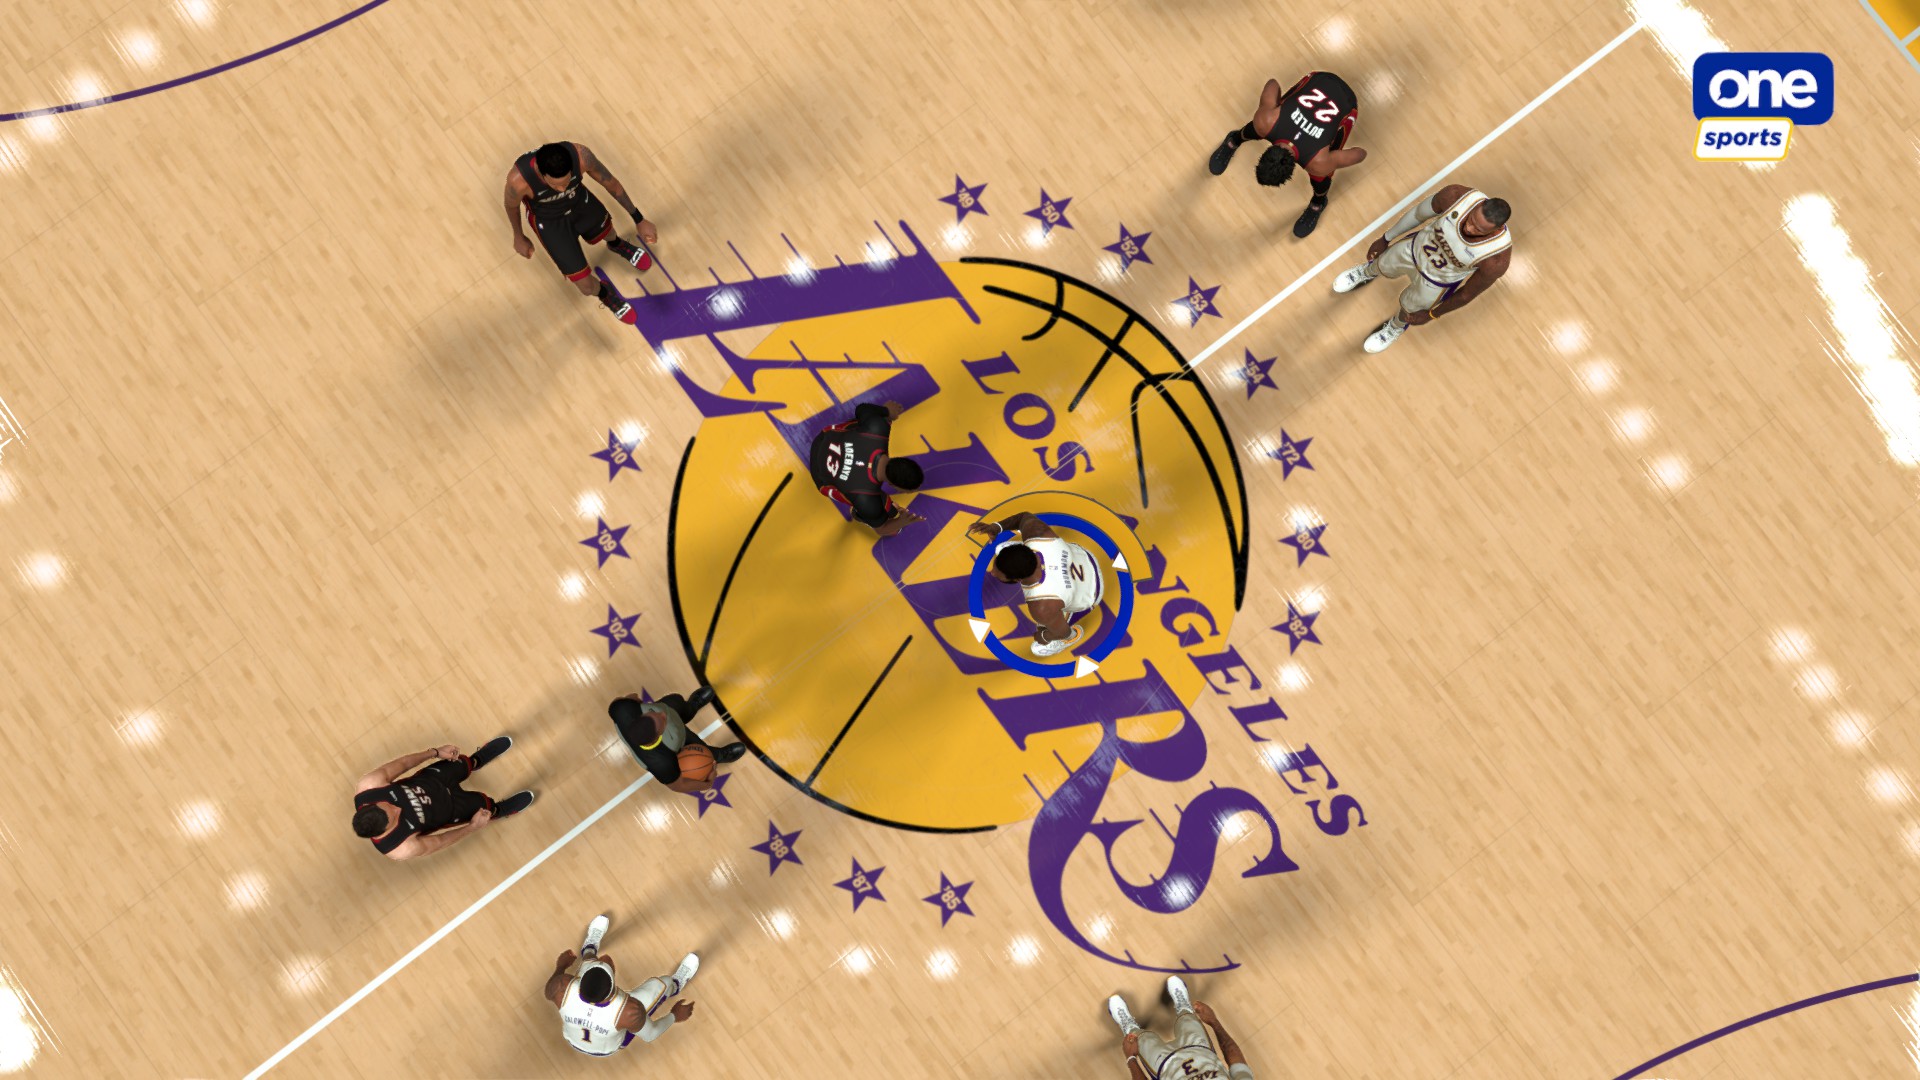 NBA 2K21 One Sports Channel (Philippines) Watermark by Shuajota